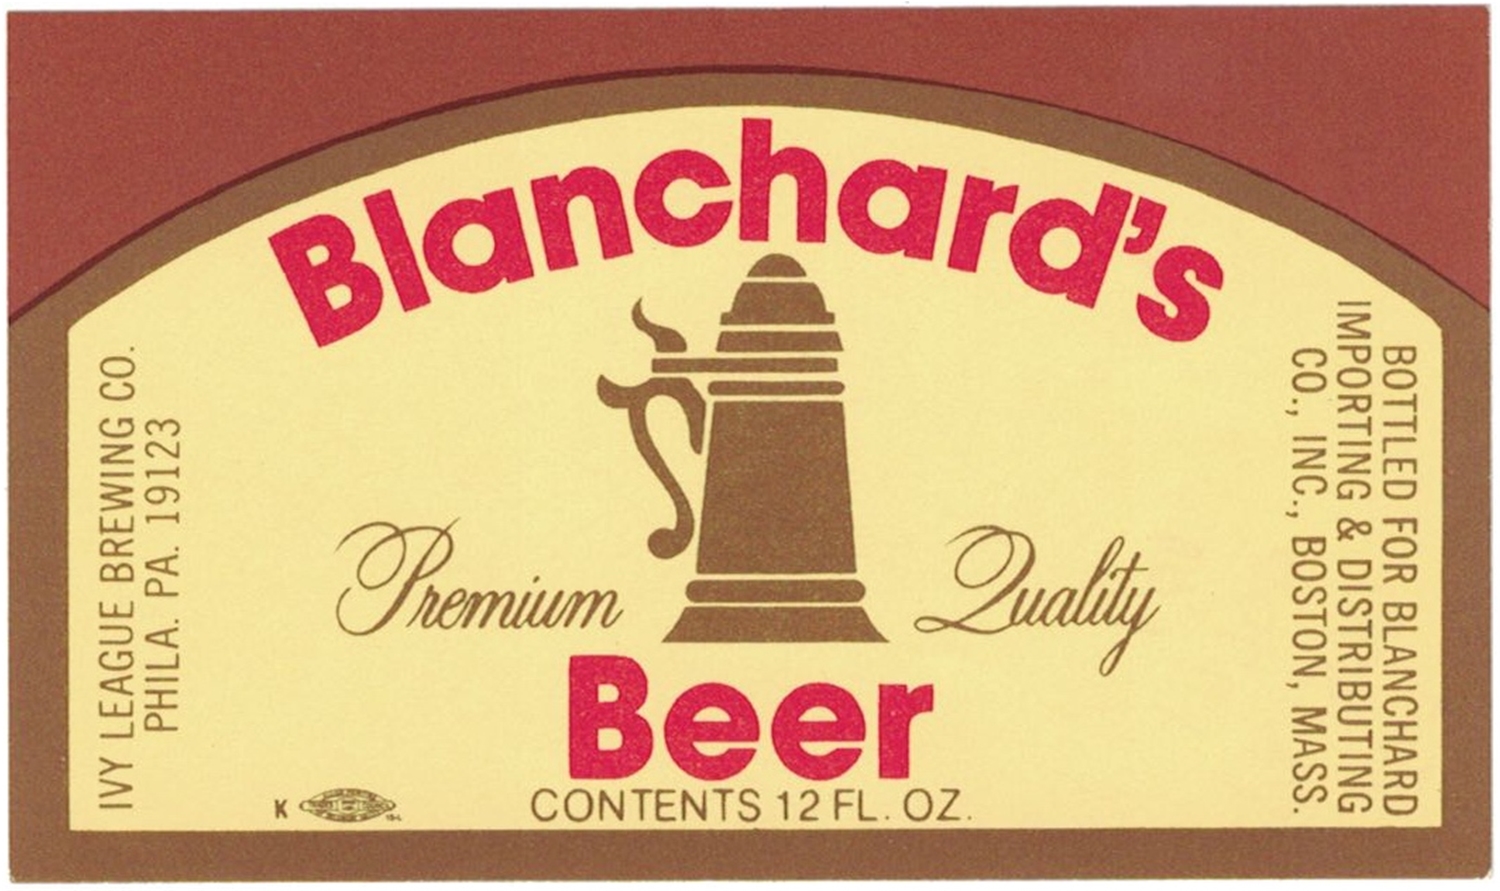 Blanchard's Premium Quality Beer Label